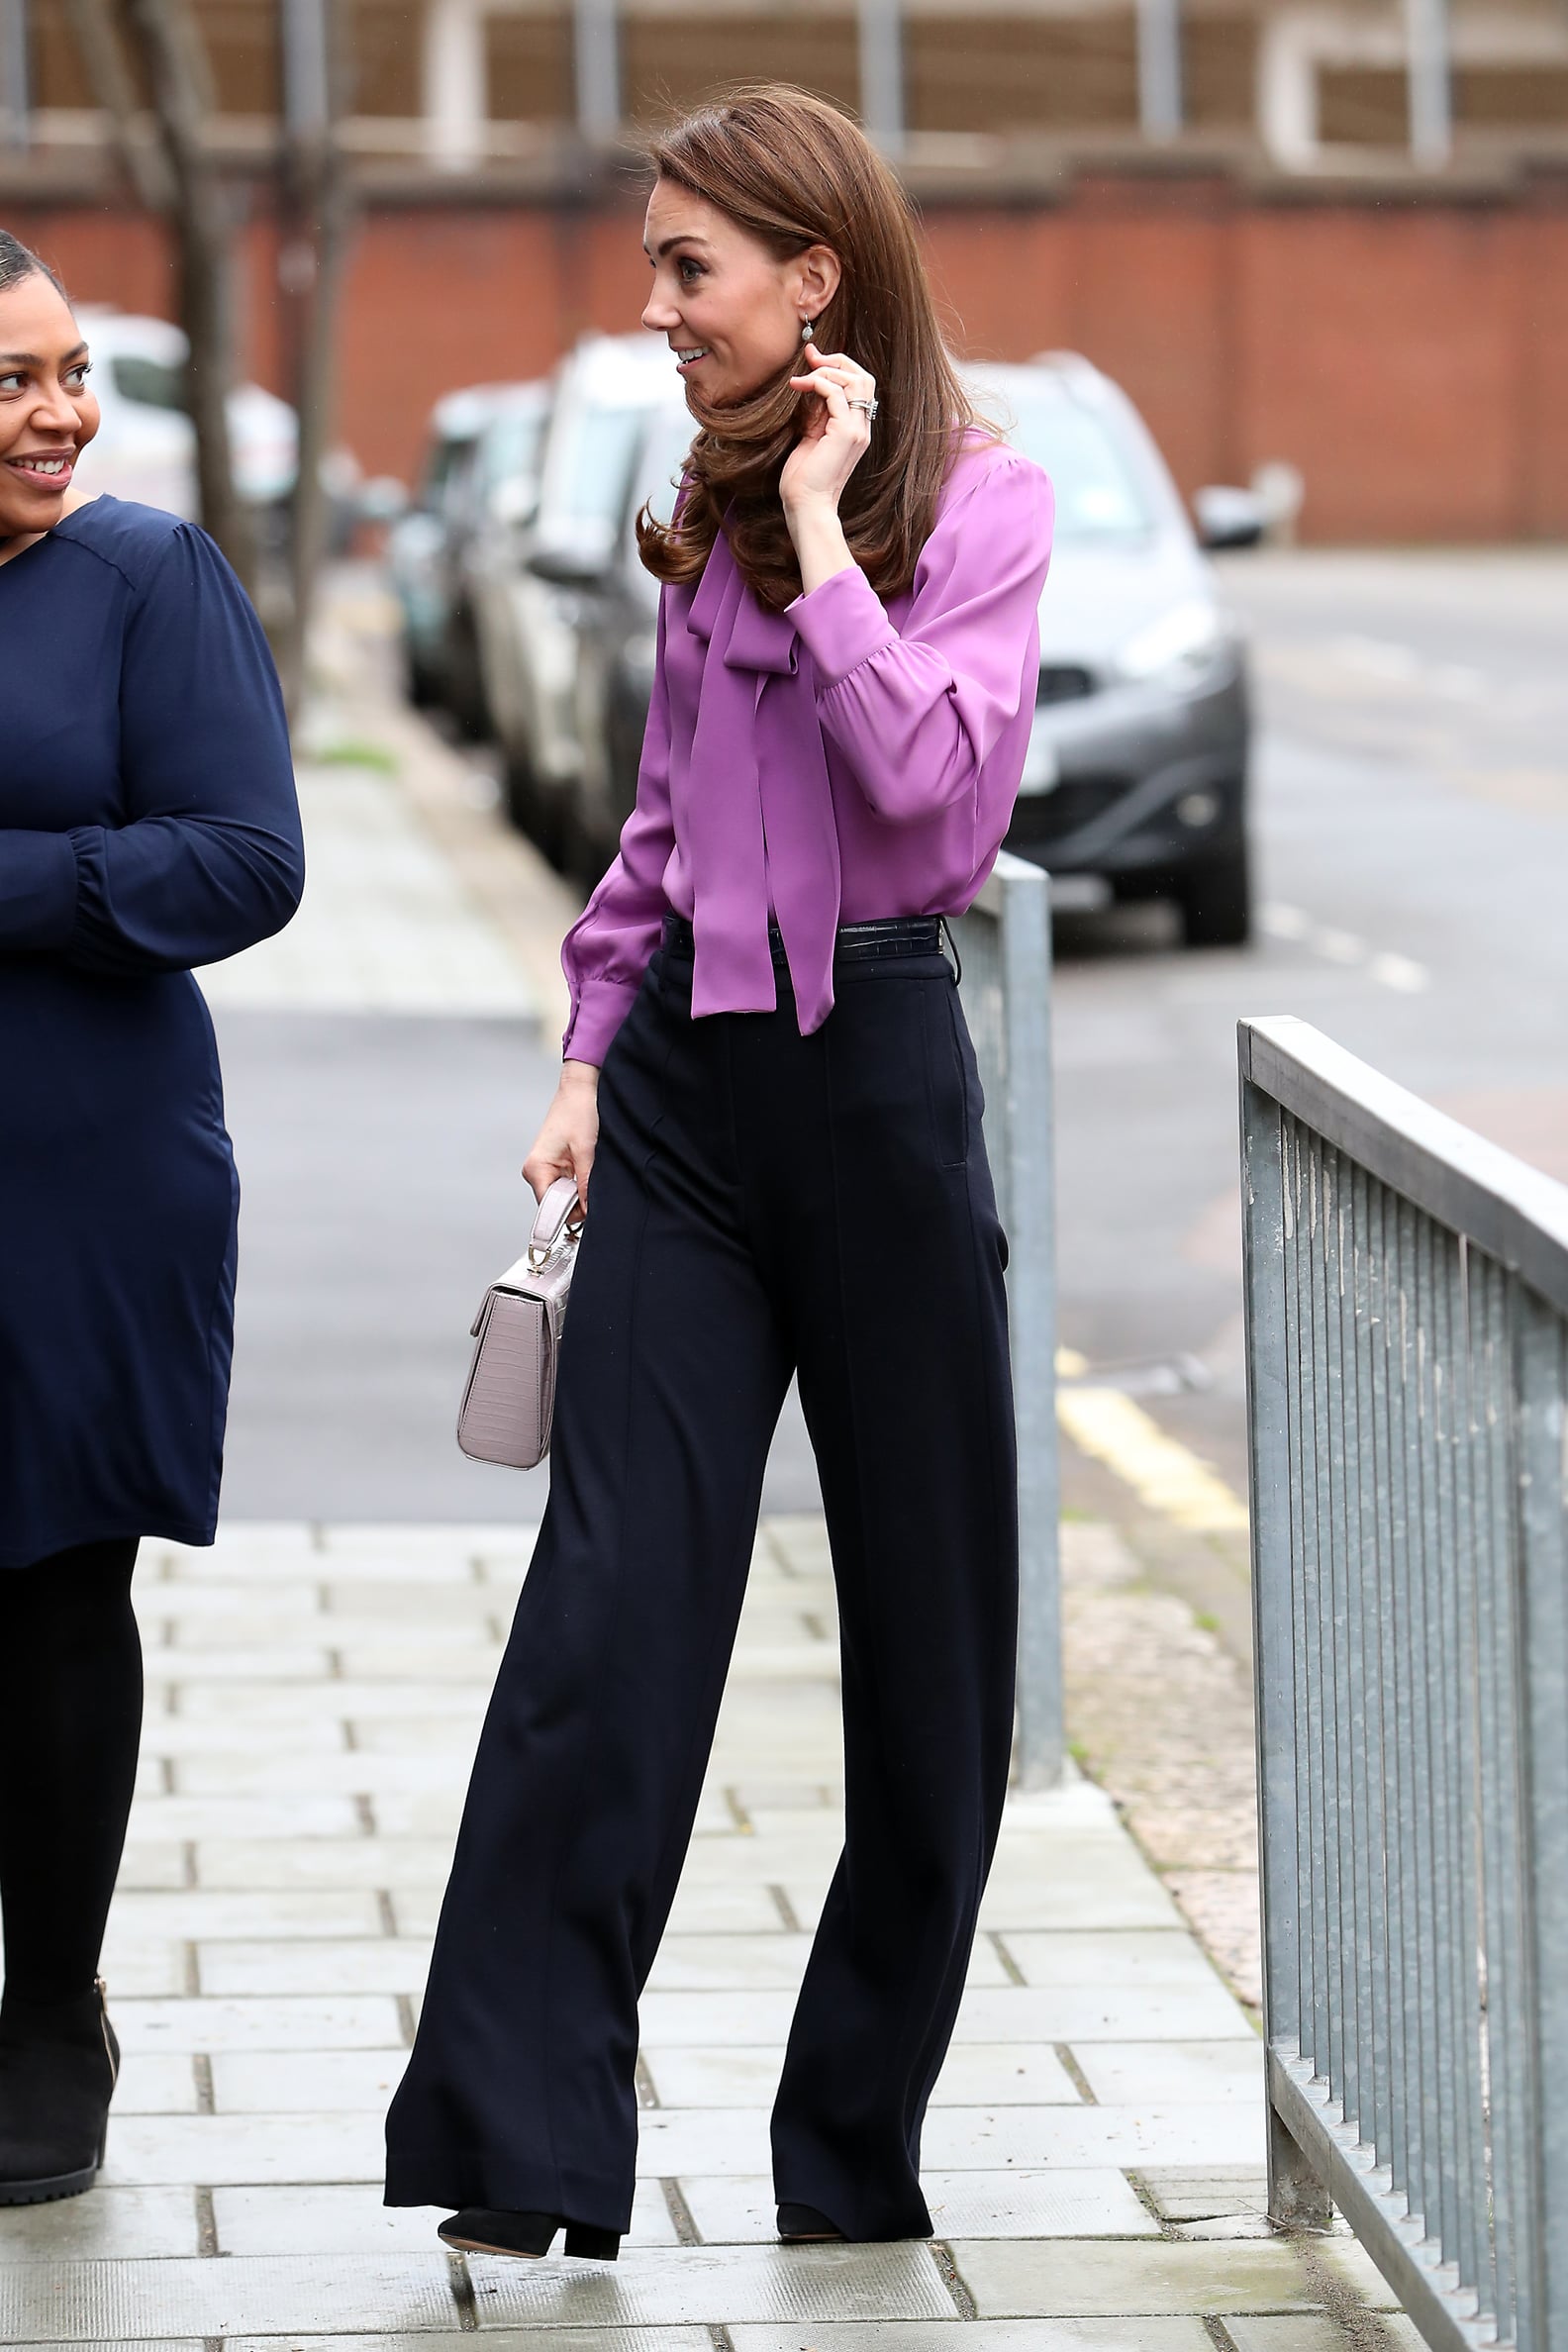 Kate Middleton Gucci Shirt and Jigsaw Pants March 2019 | POPSUGAR Fashion